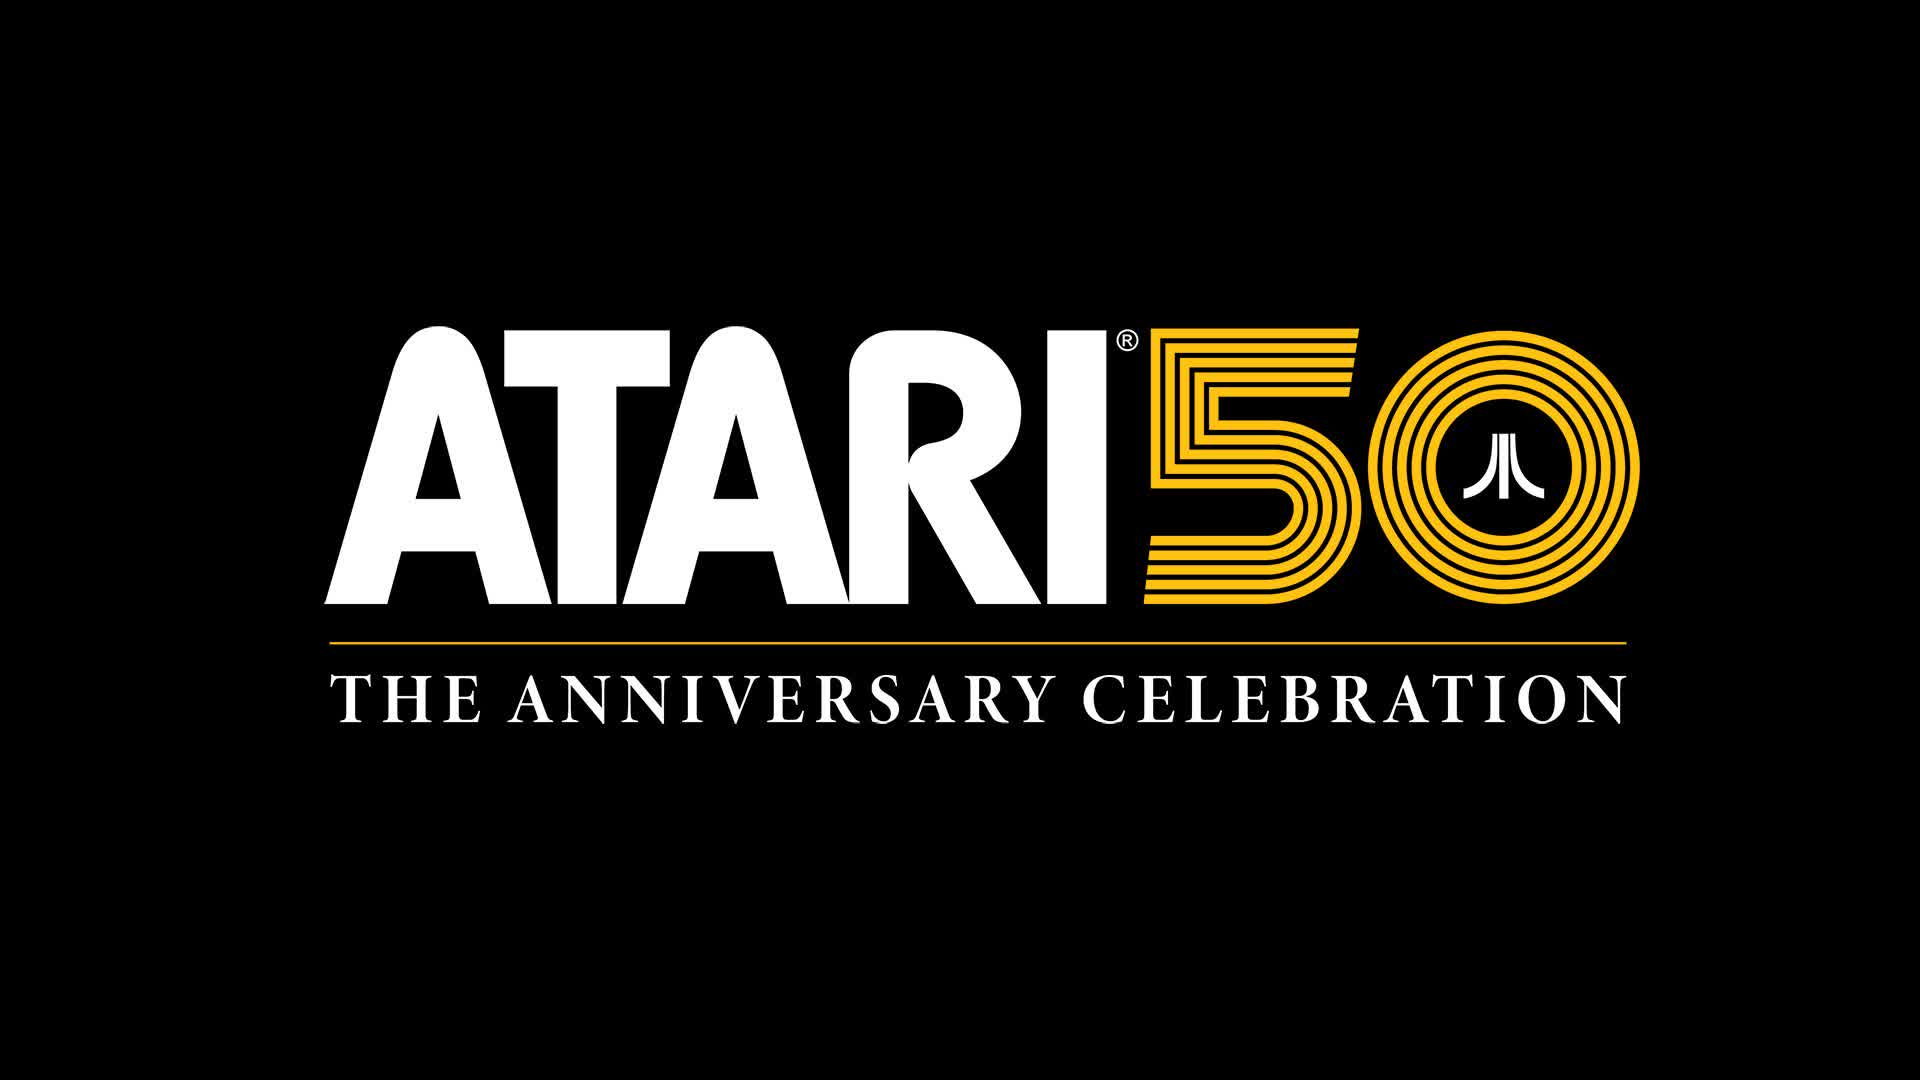 Atari 50th anniversary bundle includes more than 90 games spanning six platforms